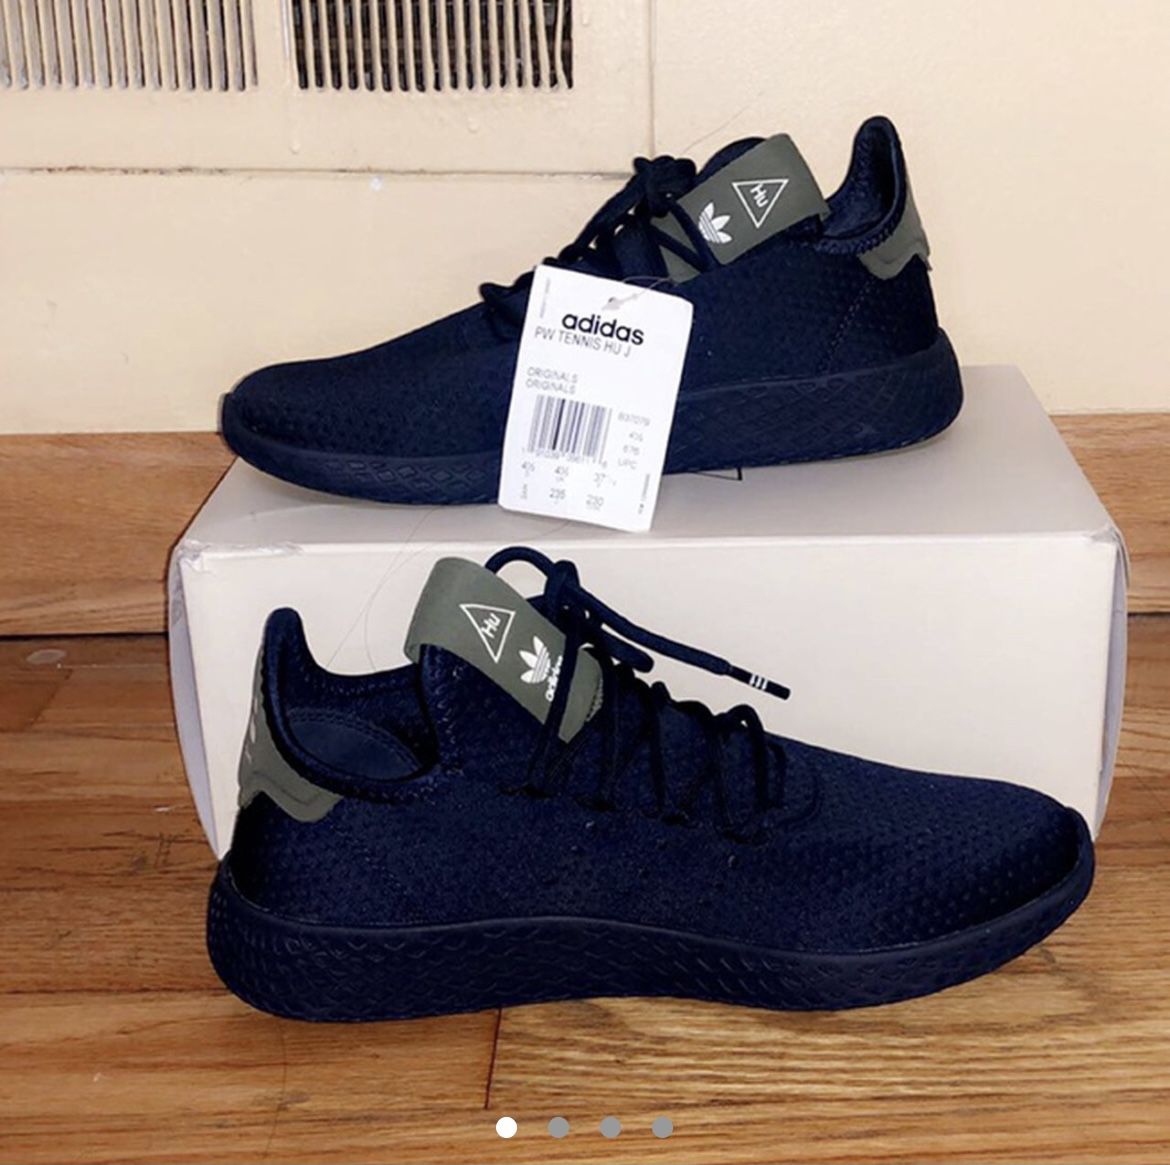 Adidas Shoes Size 5